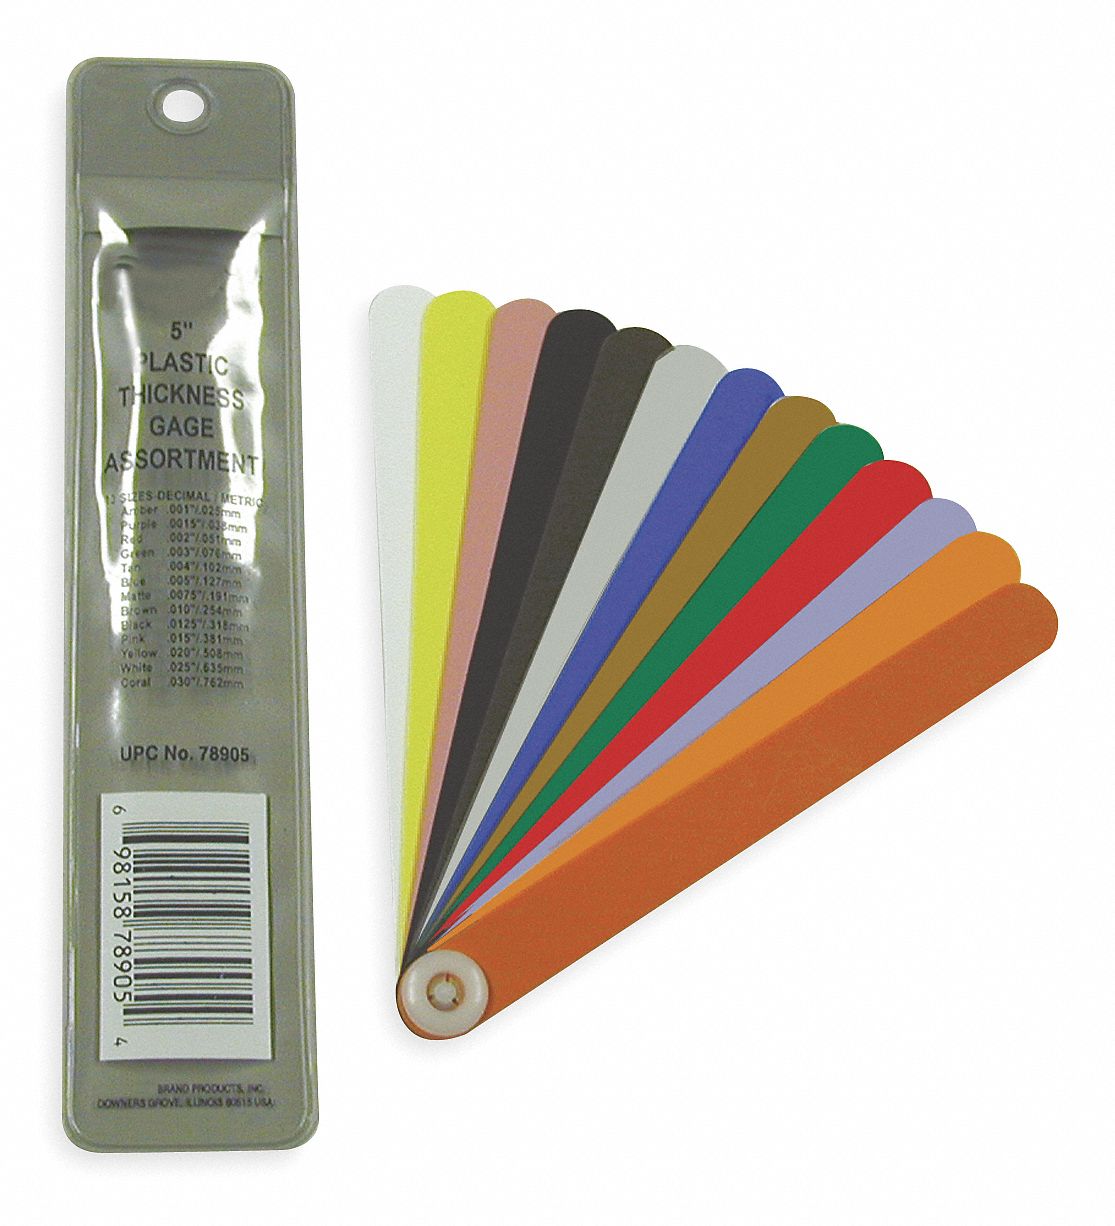 18 Pcs Plastic Inspection Feeler Gap Gauge Measuring Tools Filler Accessories for sale online 